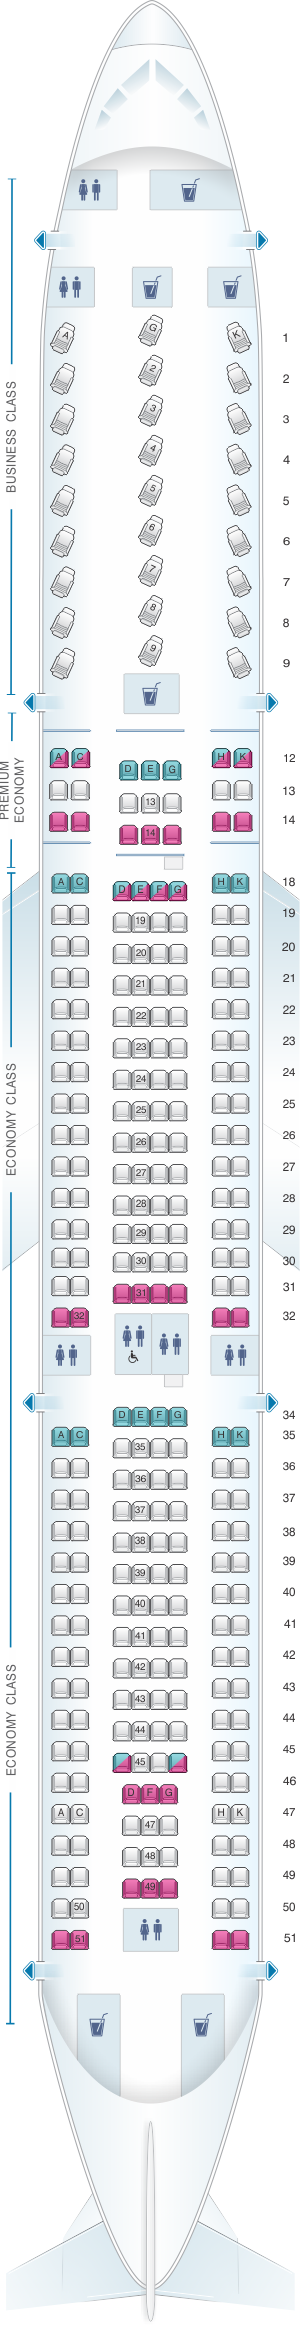 Qantas A330 300 Seat Map